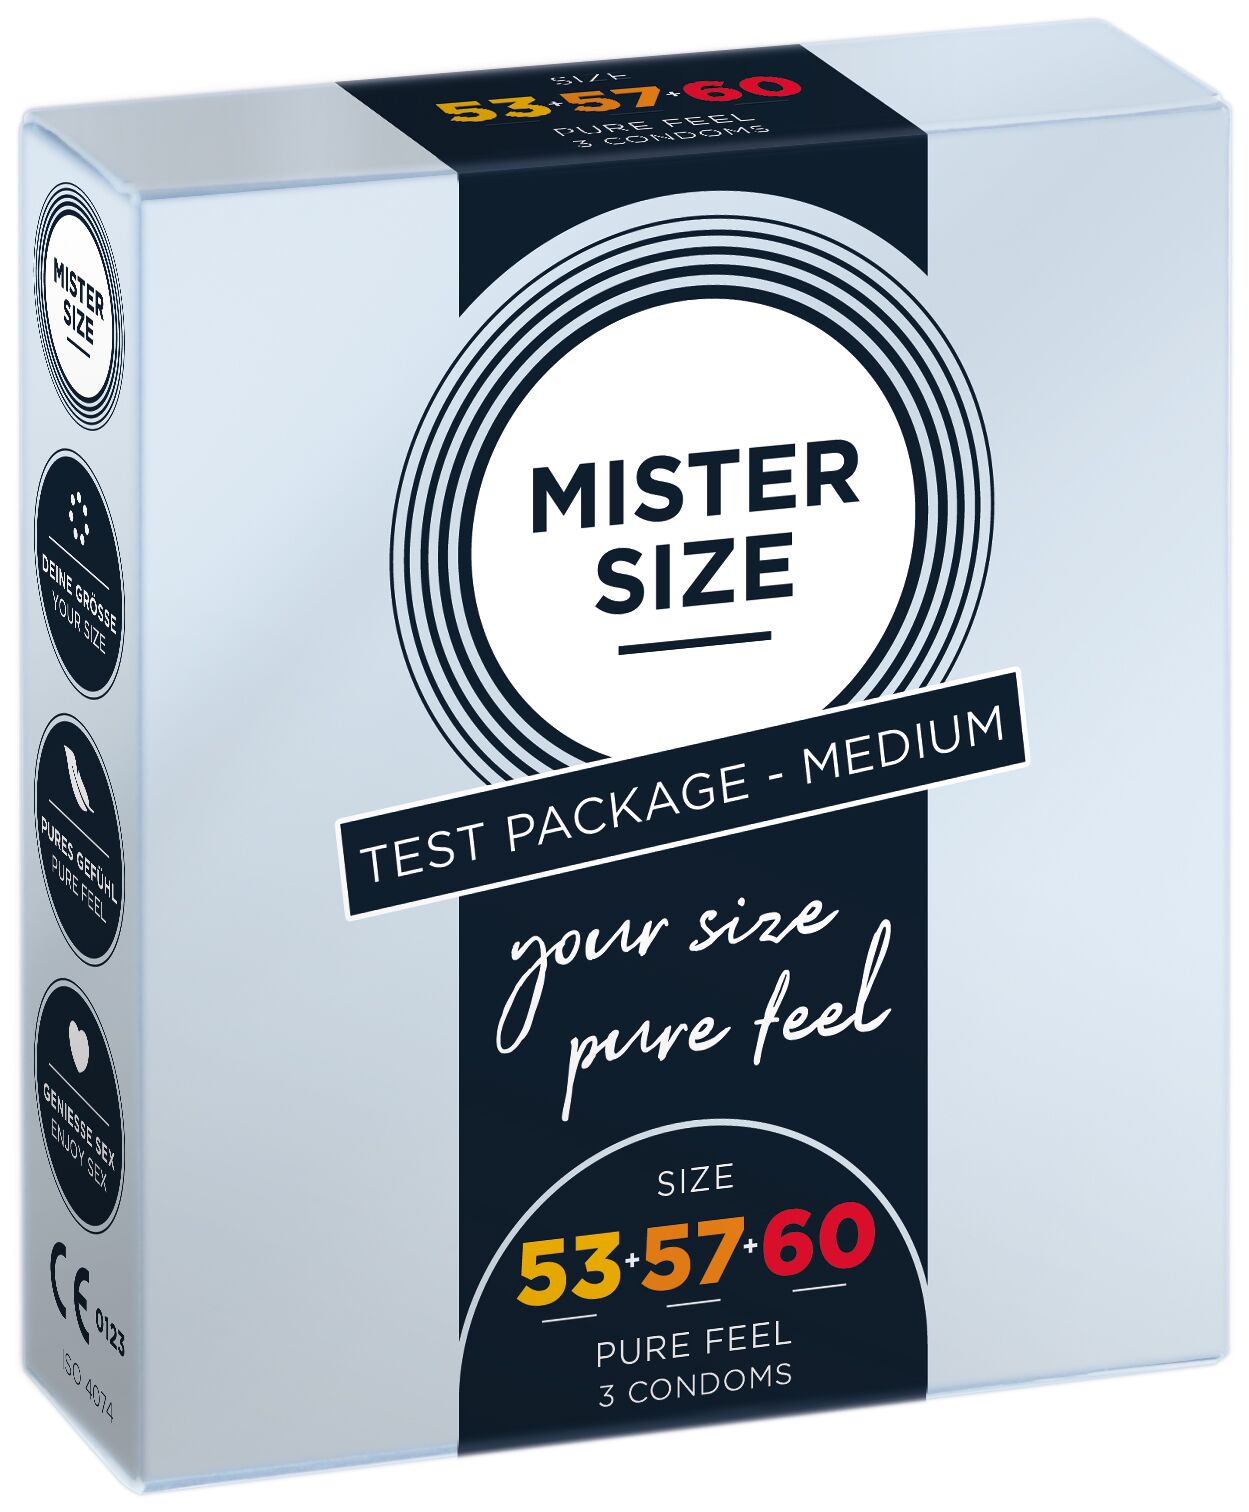 Набір презер�вативів Mister Size - pure feel - 53–57–60 (3 condoms), 3 розміри, товщина 0,05 мм